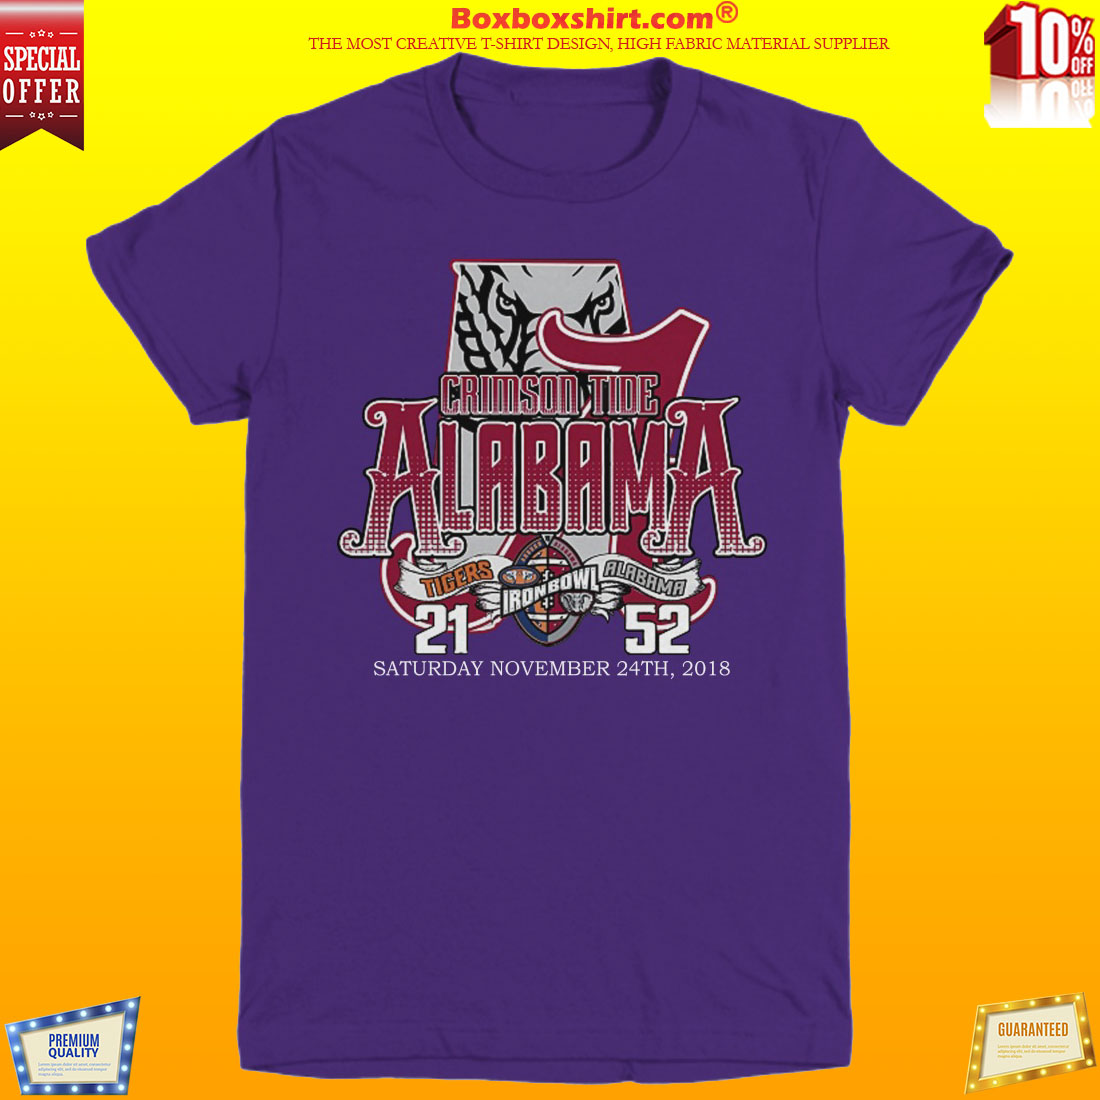 Alabama Crimson Tide and Auburn Tigers shirt